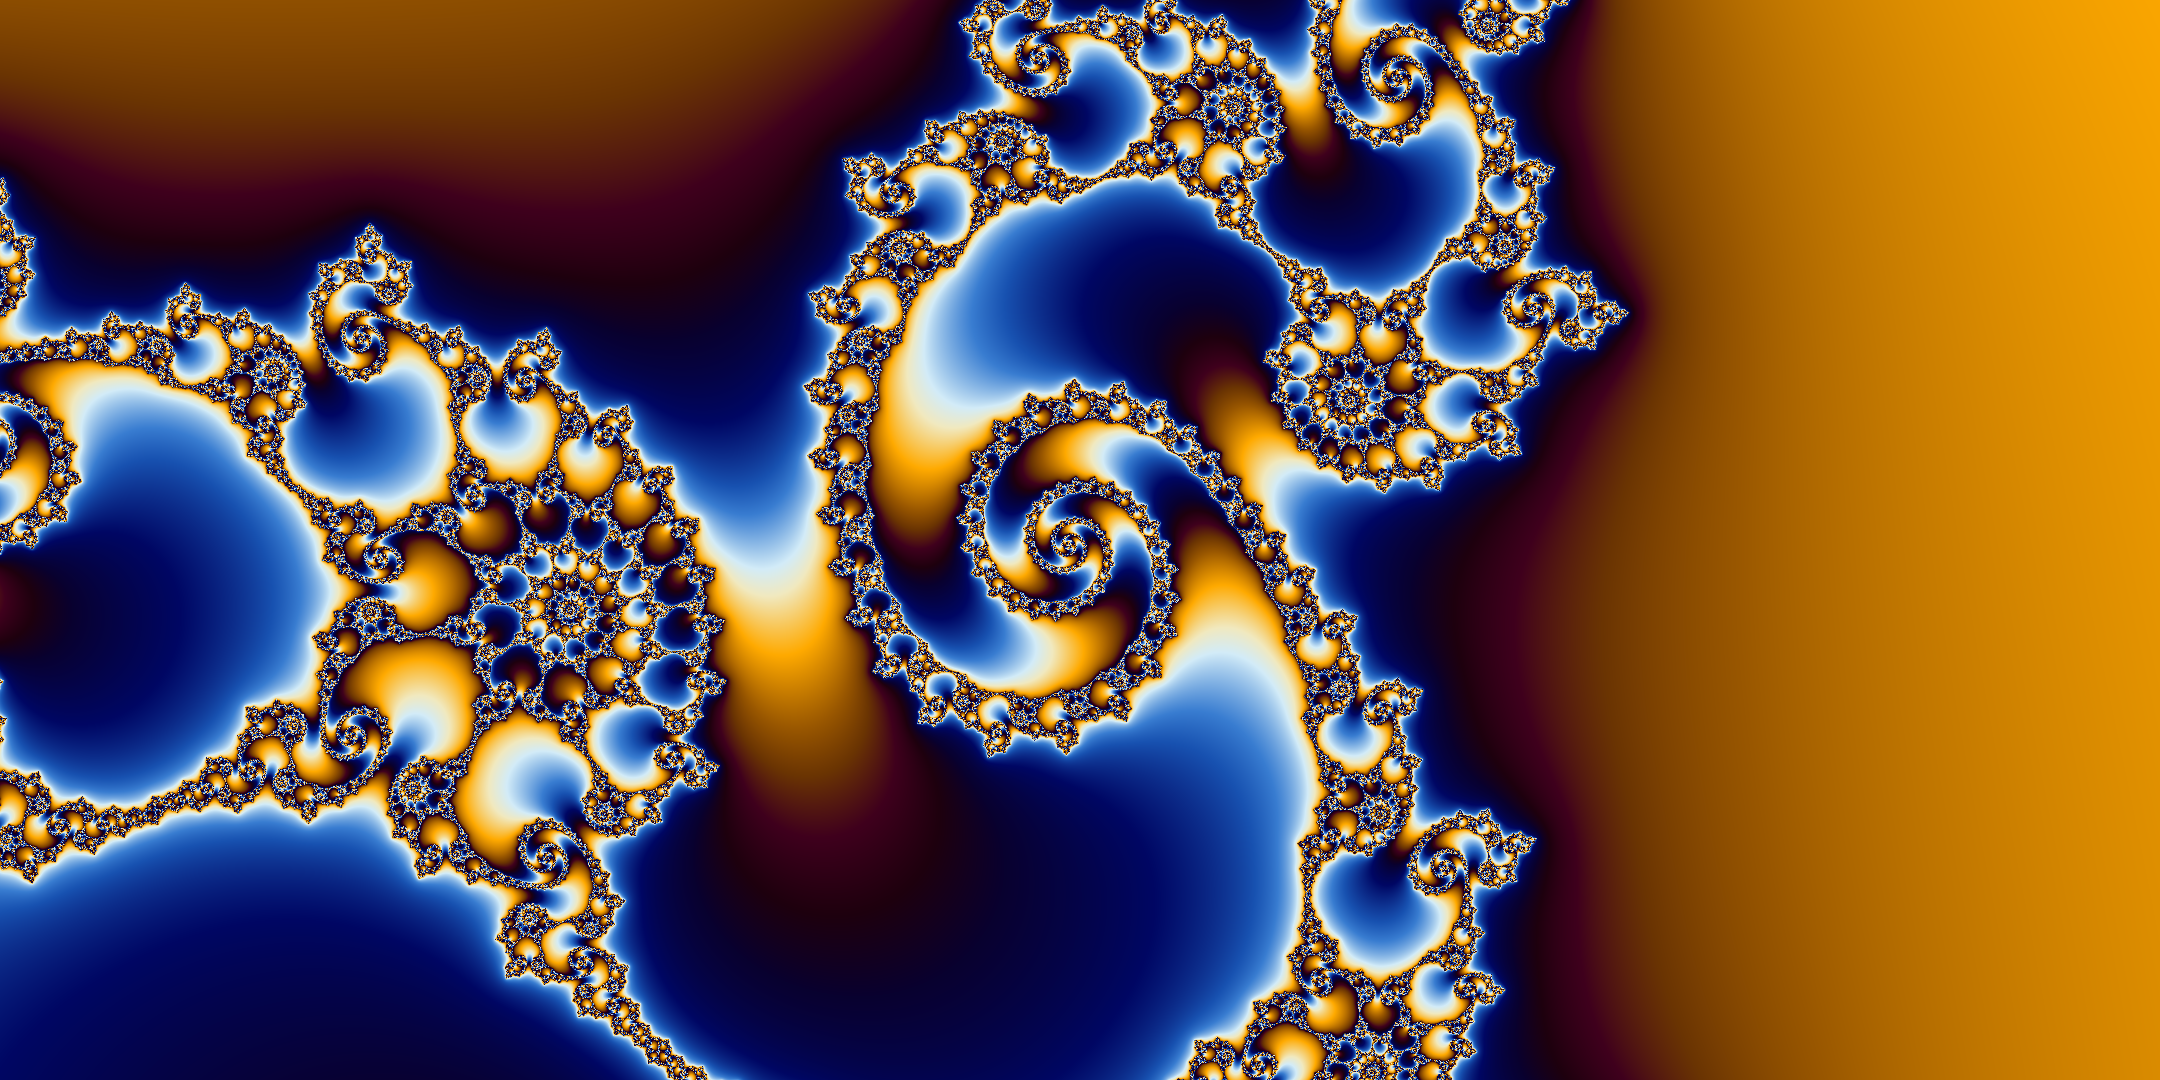 A location of the Mandelbrot fractal